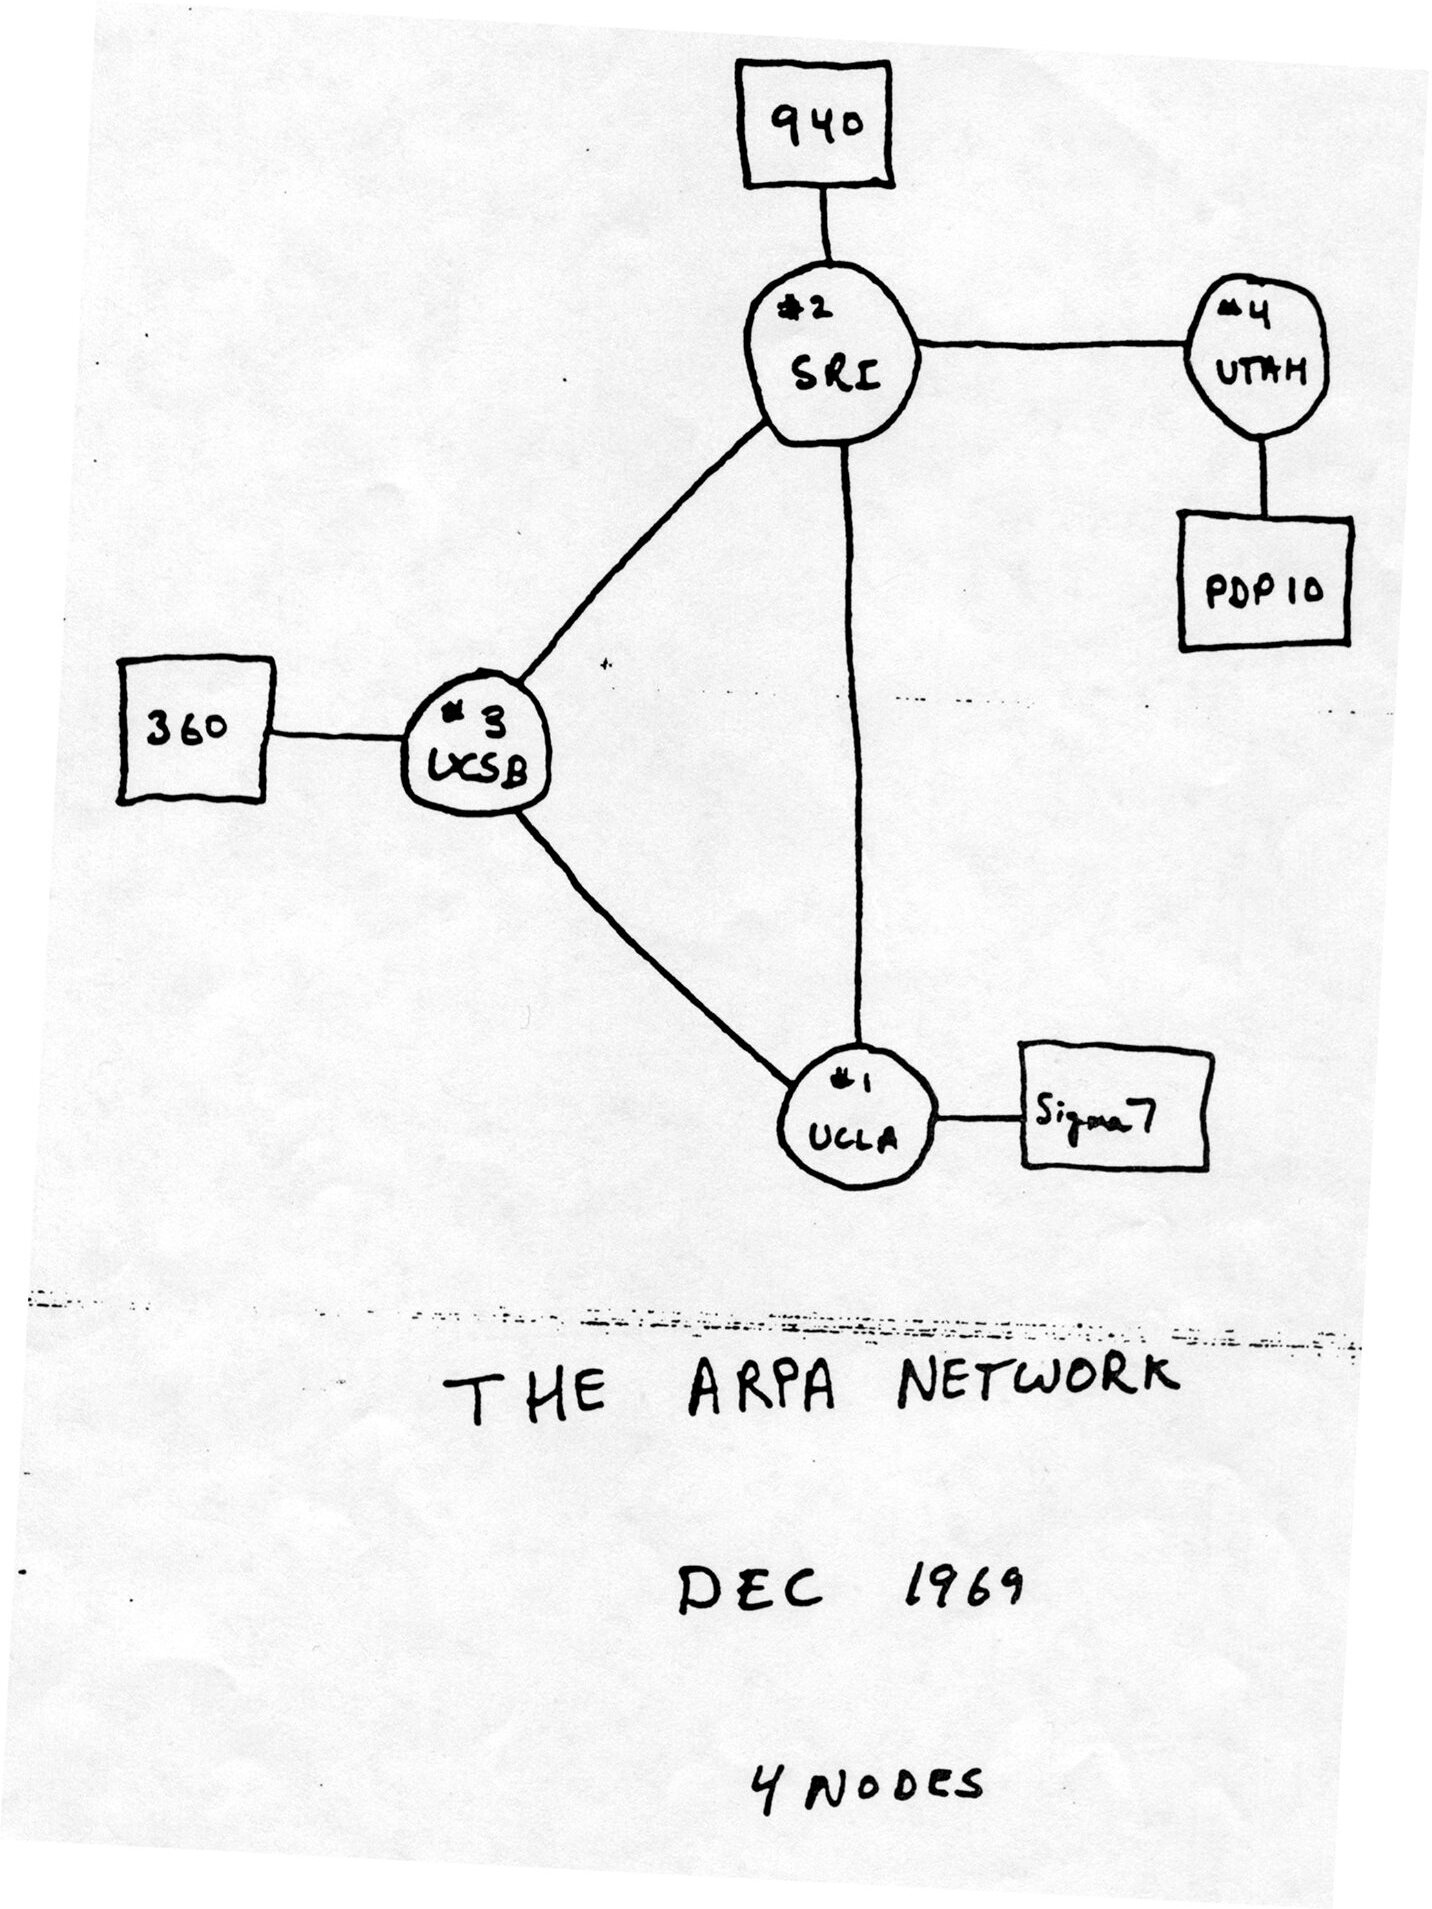 The original sketch of ARPANET.